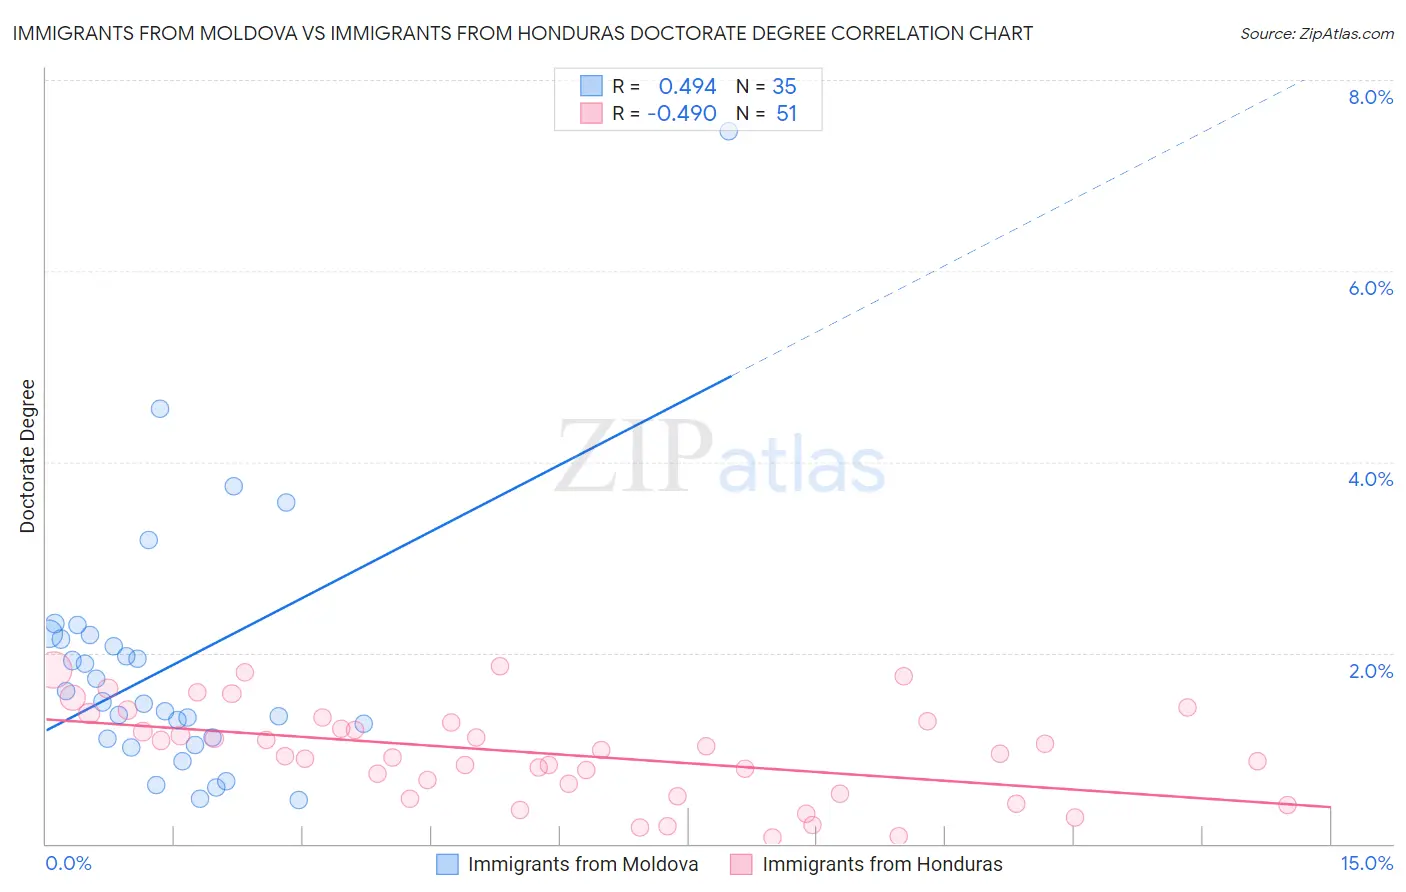 Immigrants from Moldova vs Immigrants from Honduras Doctorate Degree